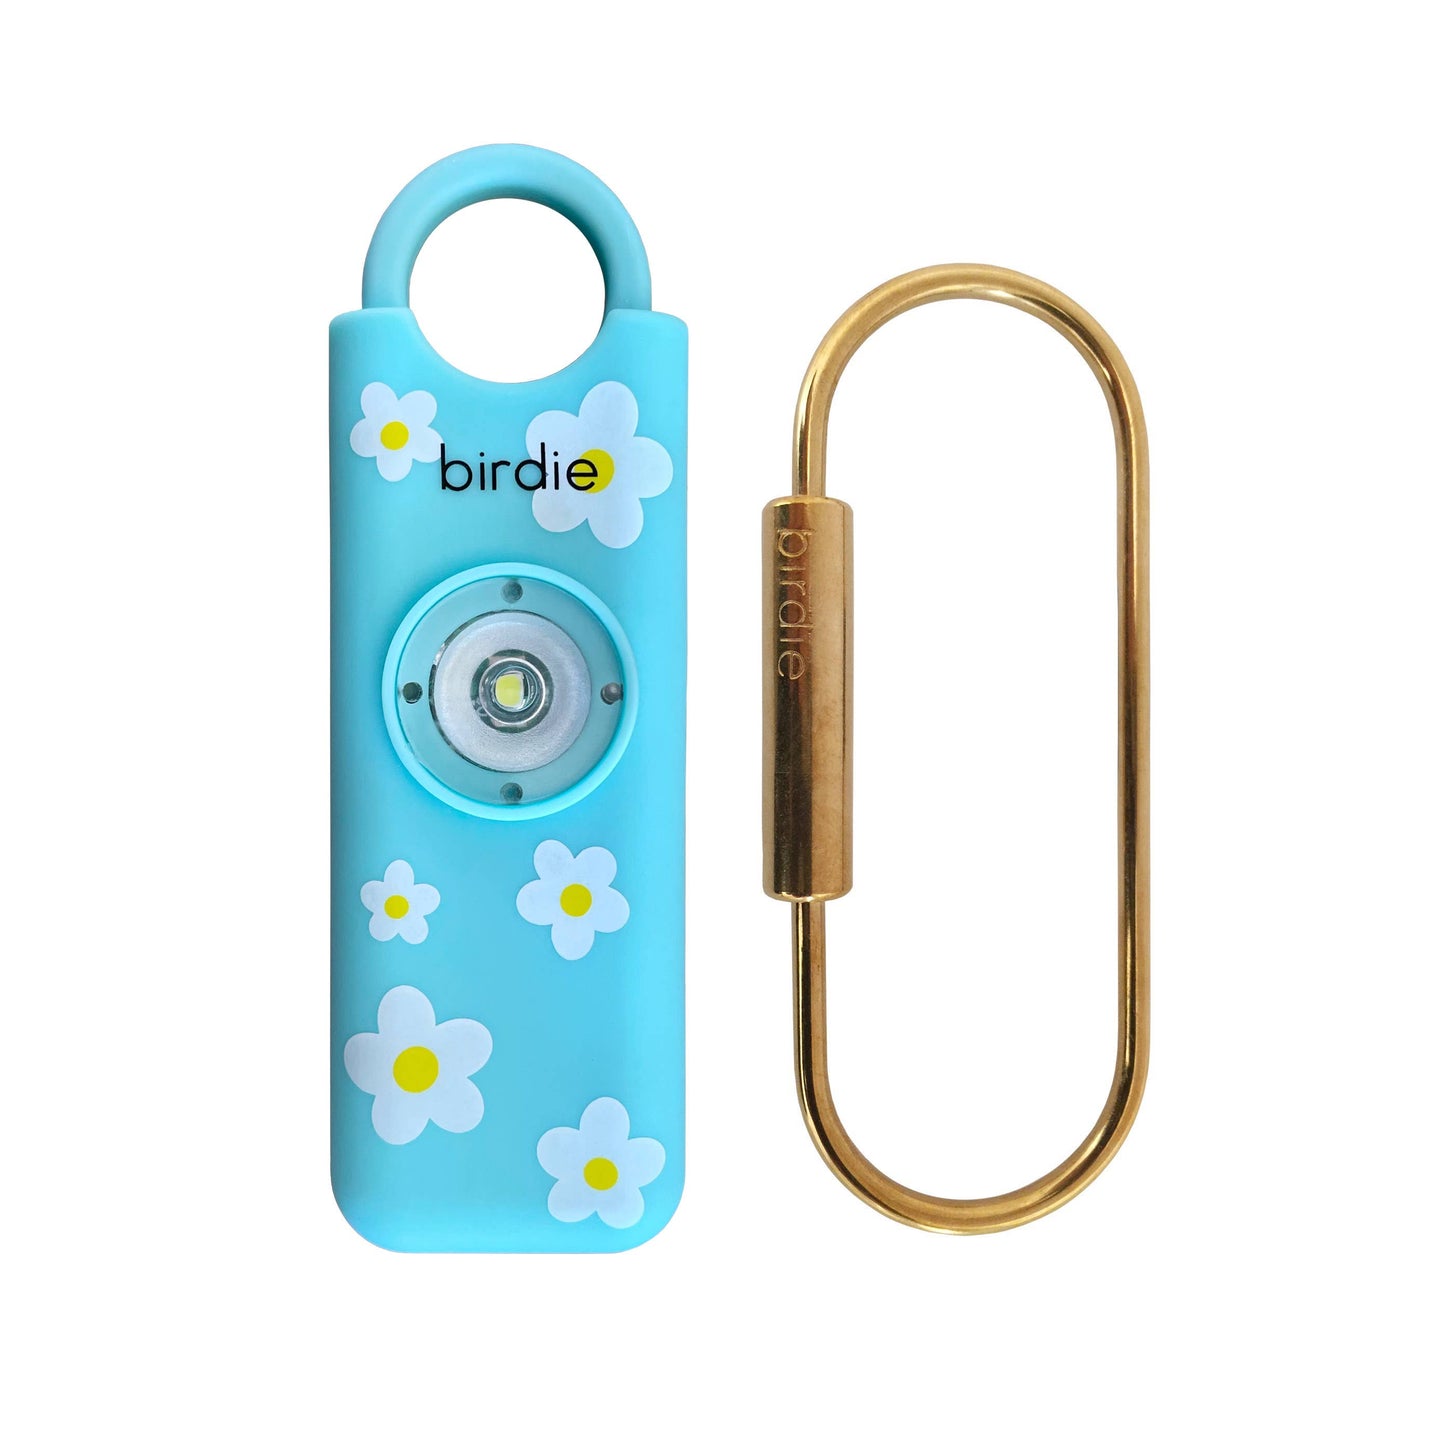 She's Birdie Personal Safety Alarm: Single / Cheetah